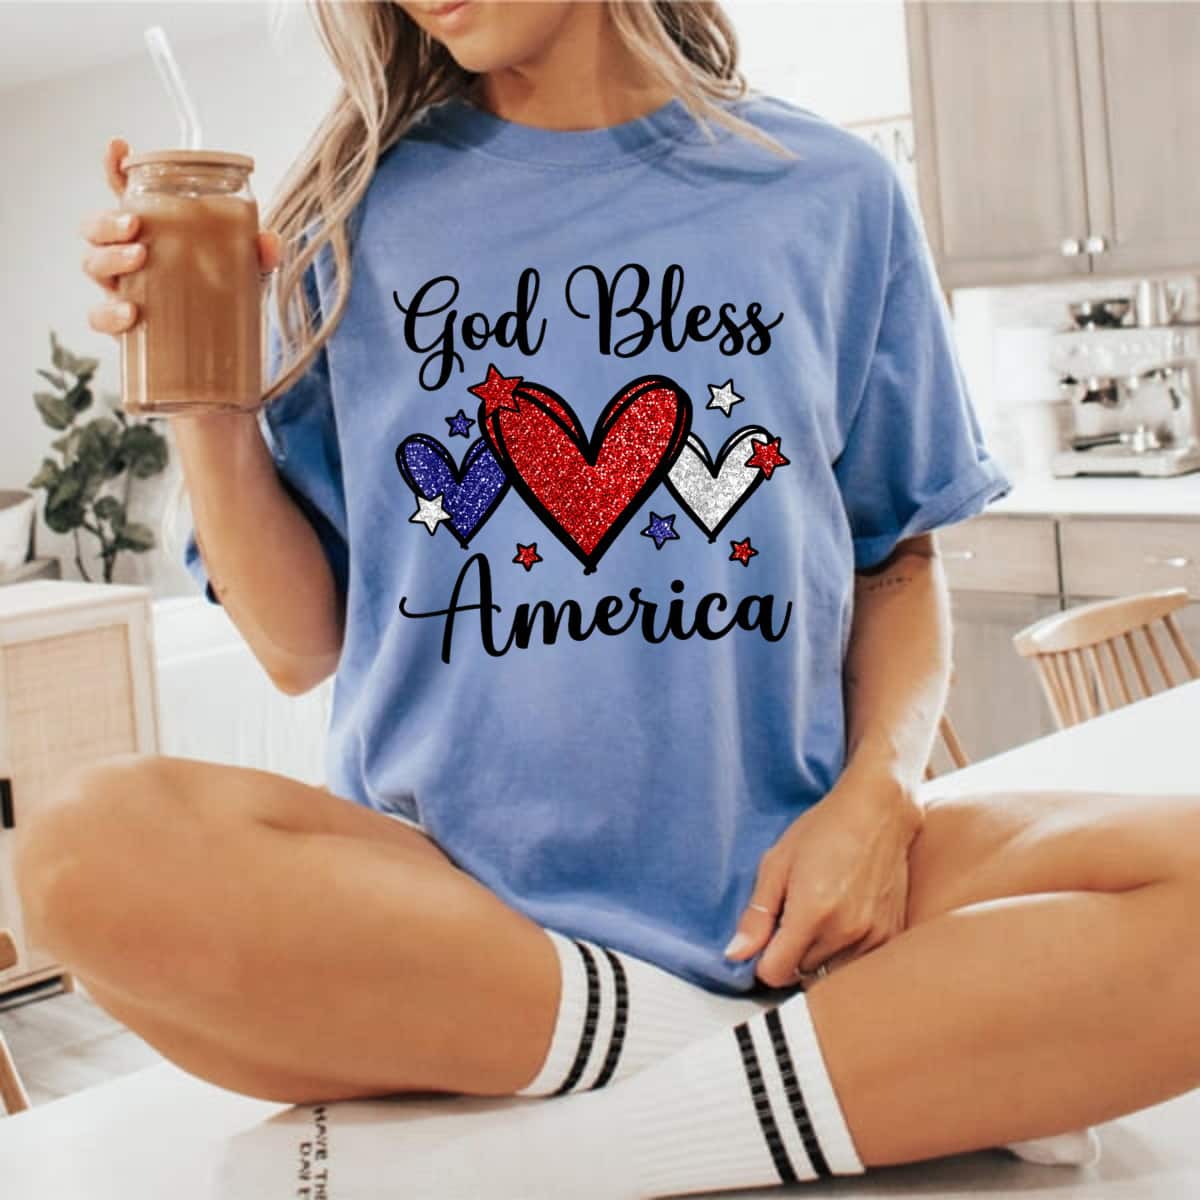 God Bless America Patriotic USA Flag Colors For Christians T-Shirt